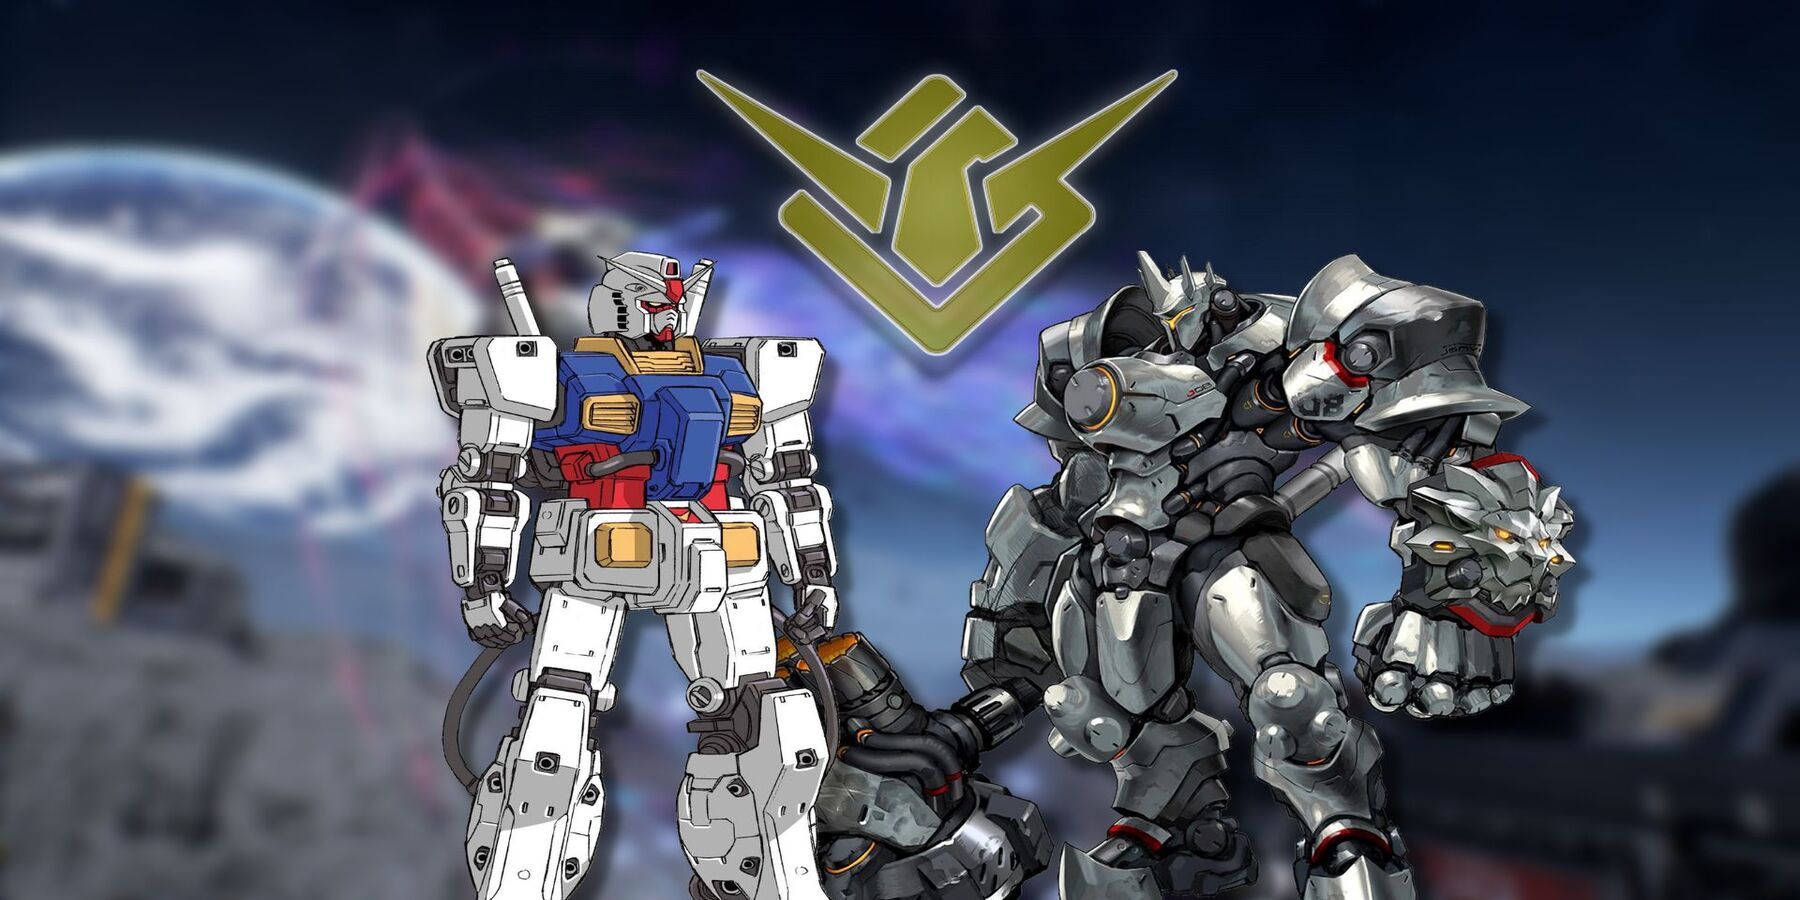 Gundam Evolution and Overwatch 2 image